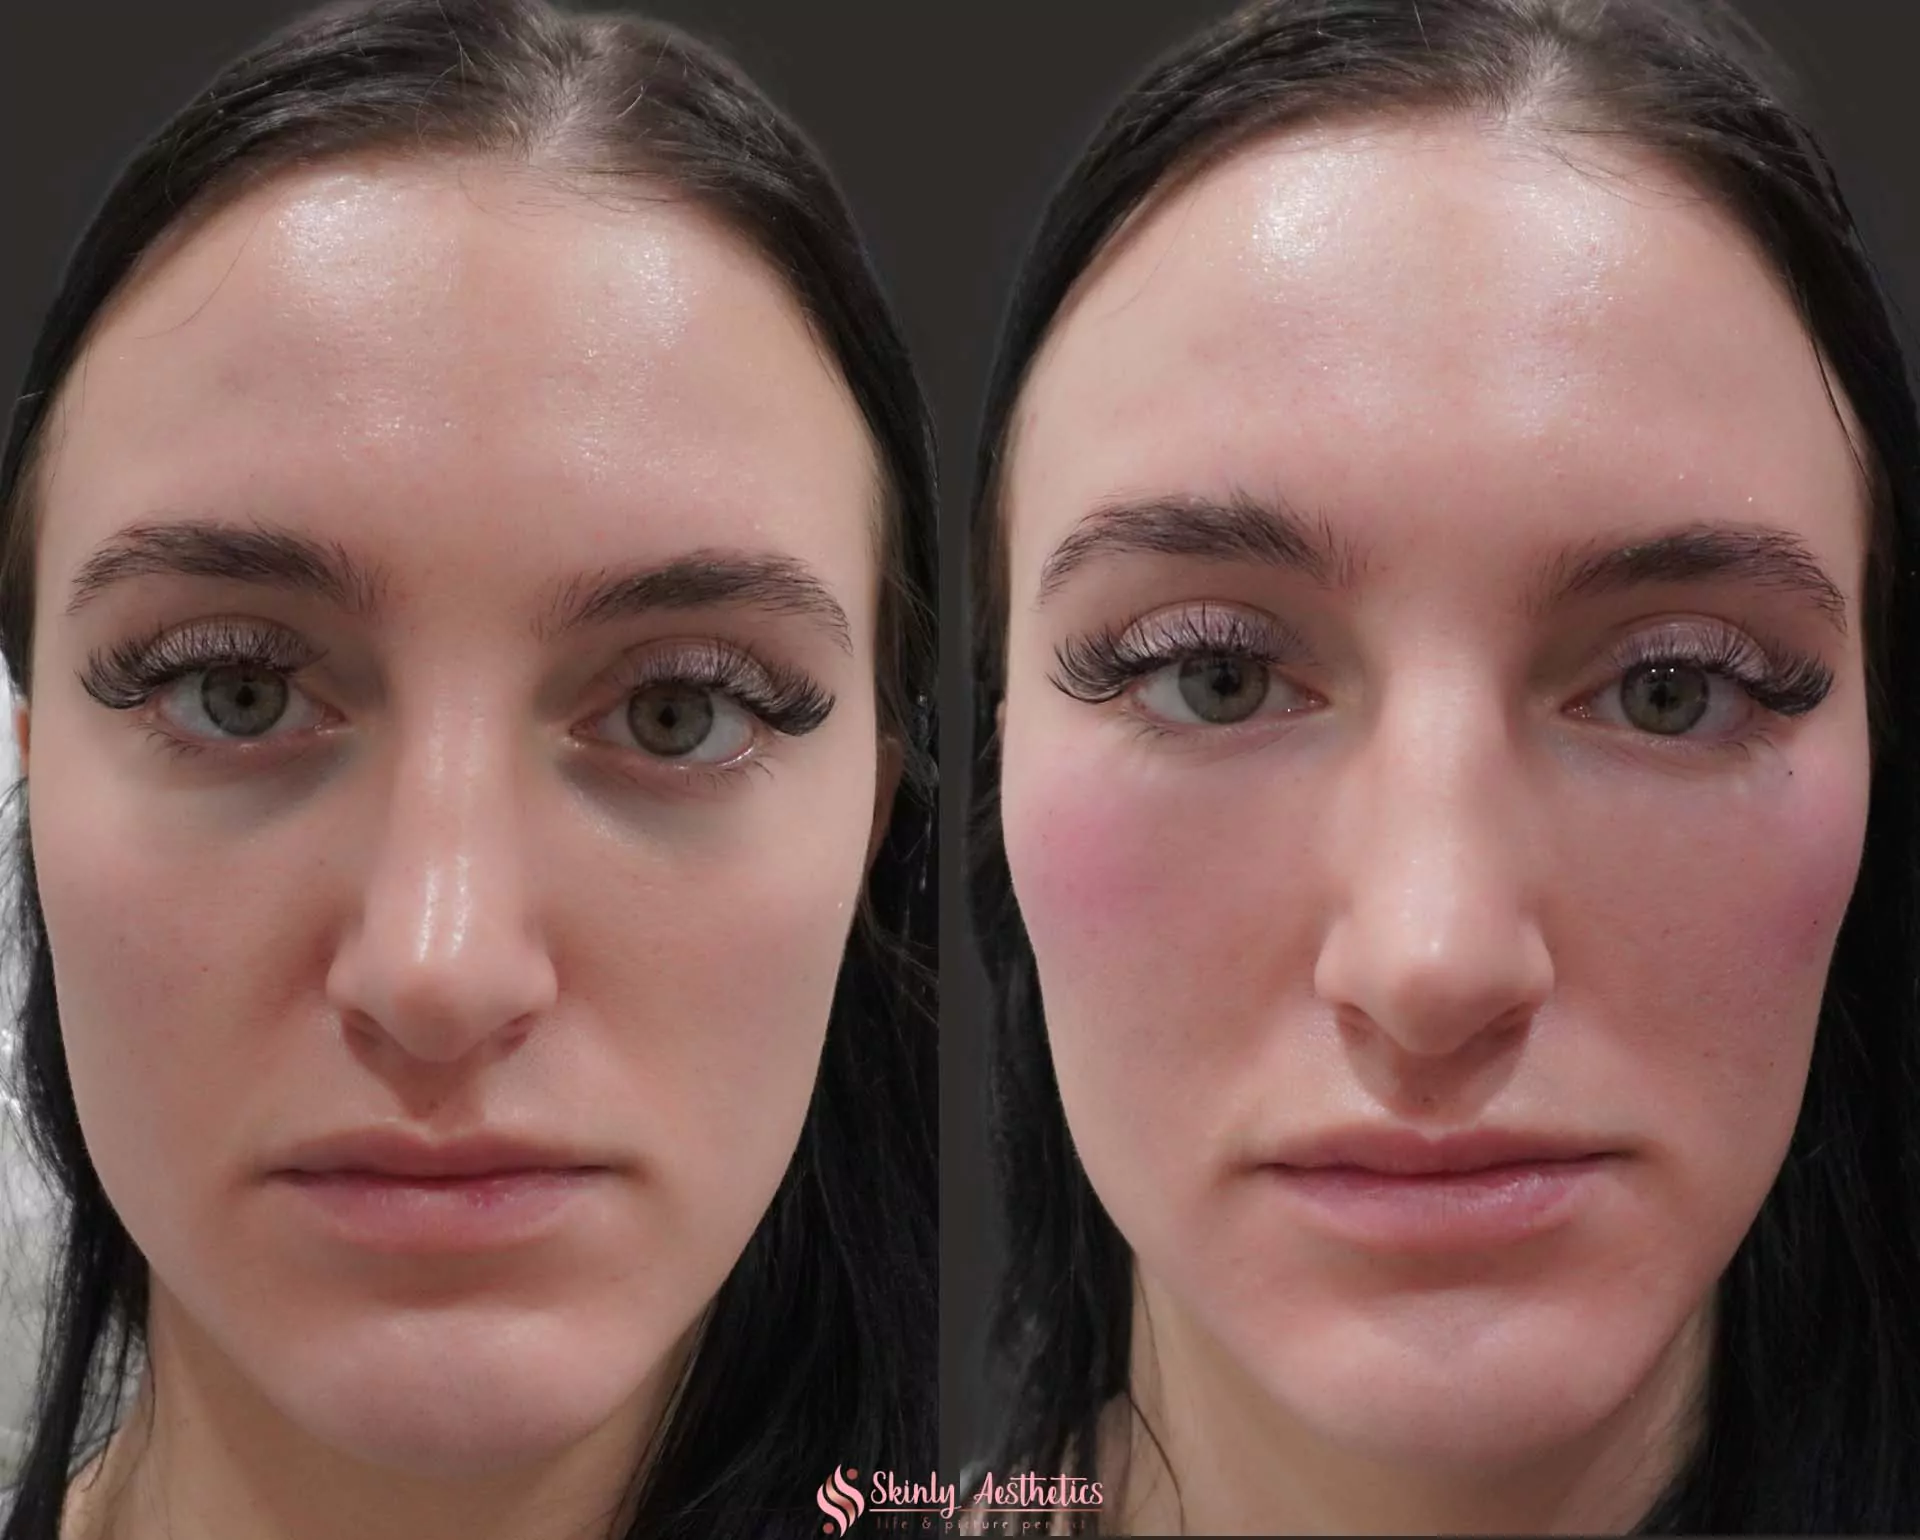 cheek augmentation and under eye dark circles treatment with Juvederm filler 1